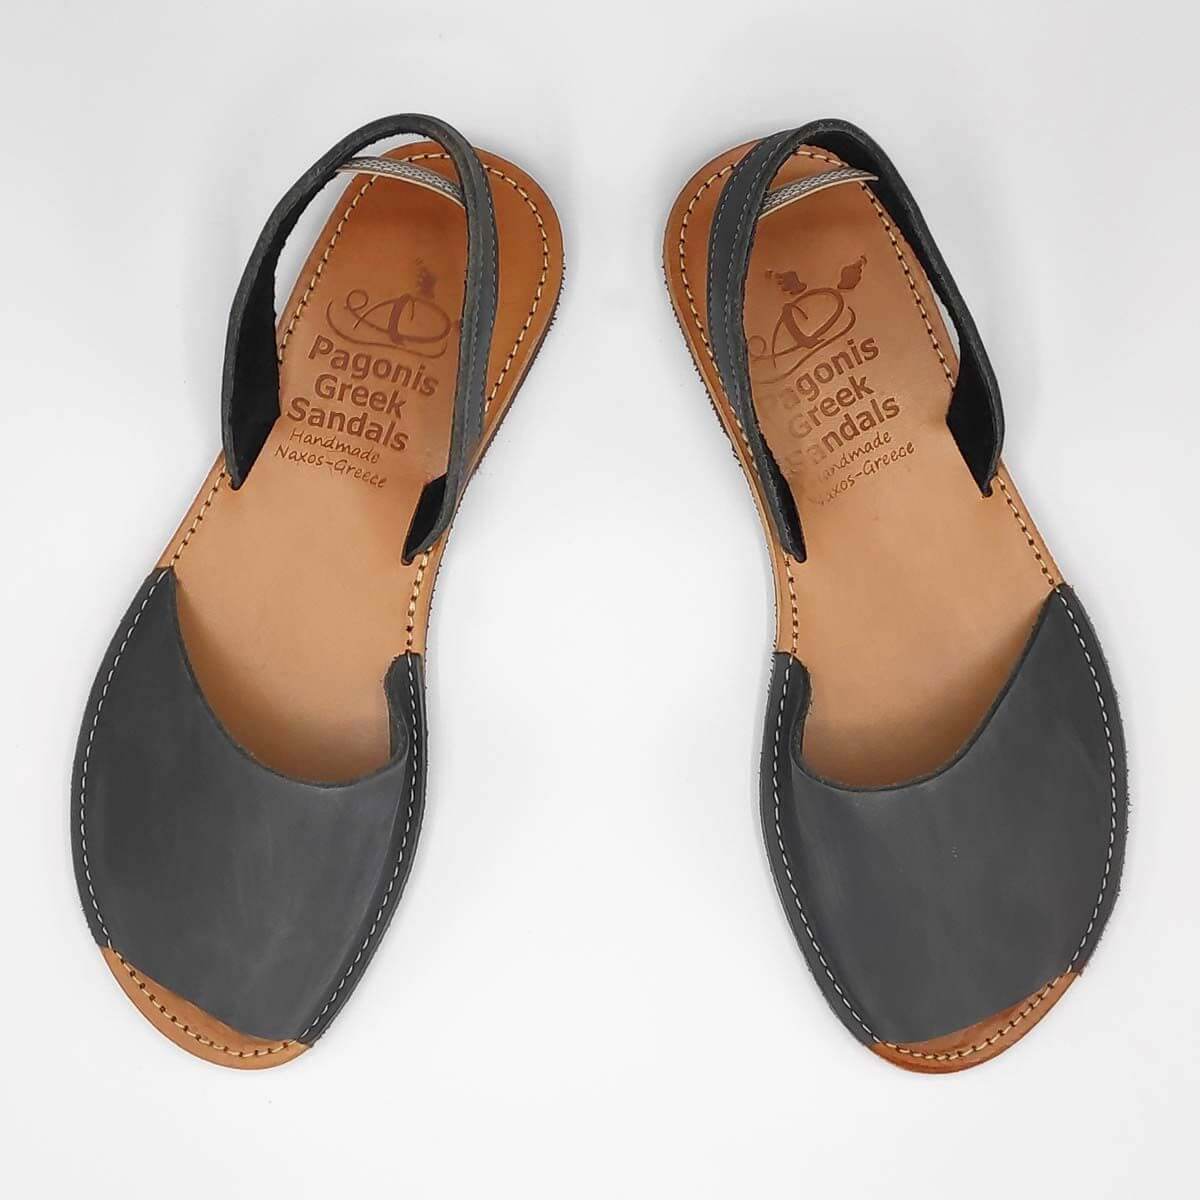 Agali Menorcan Sandals Avarca Sandals Menorcan Sandals | Avarca Sandals -  Leather Sandals | Pagonis Greek Sandals